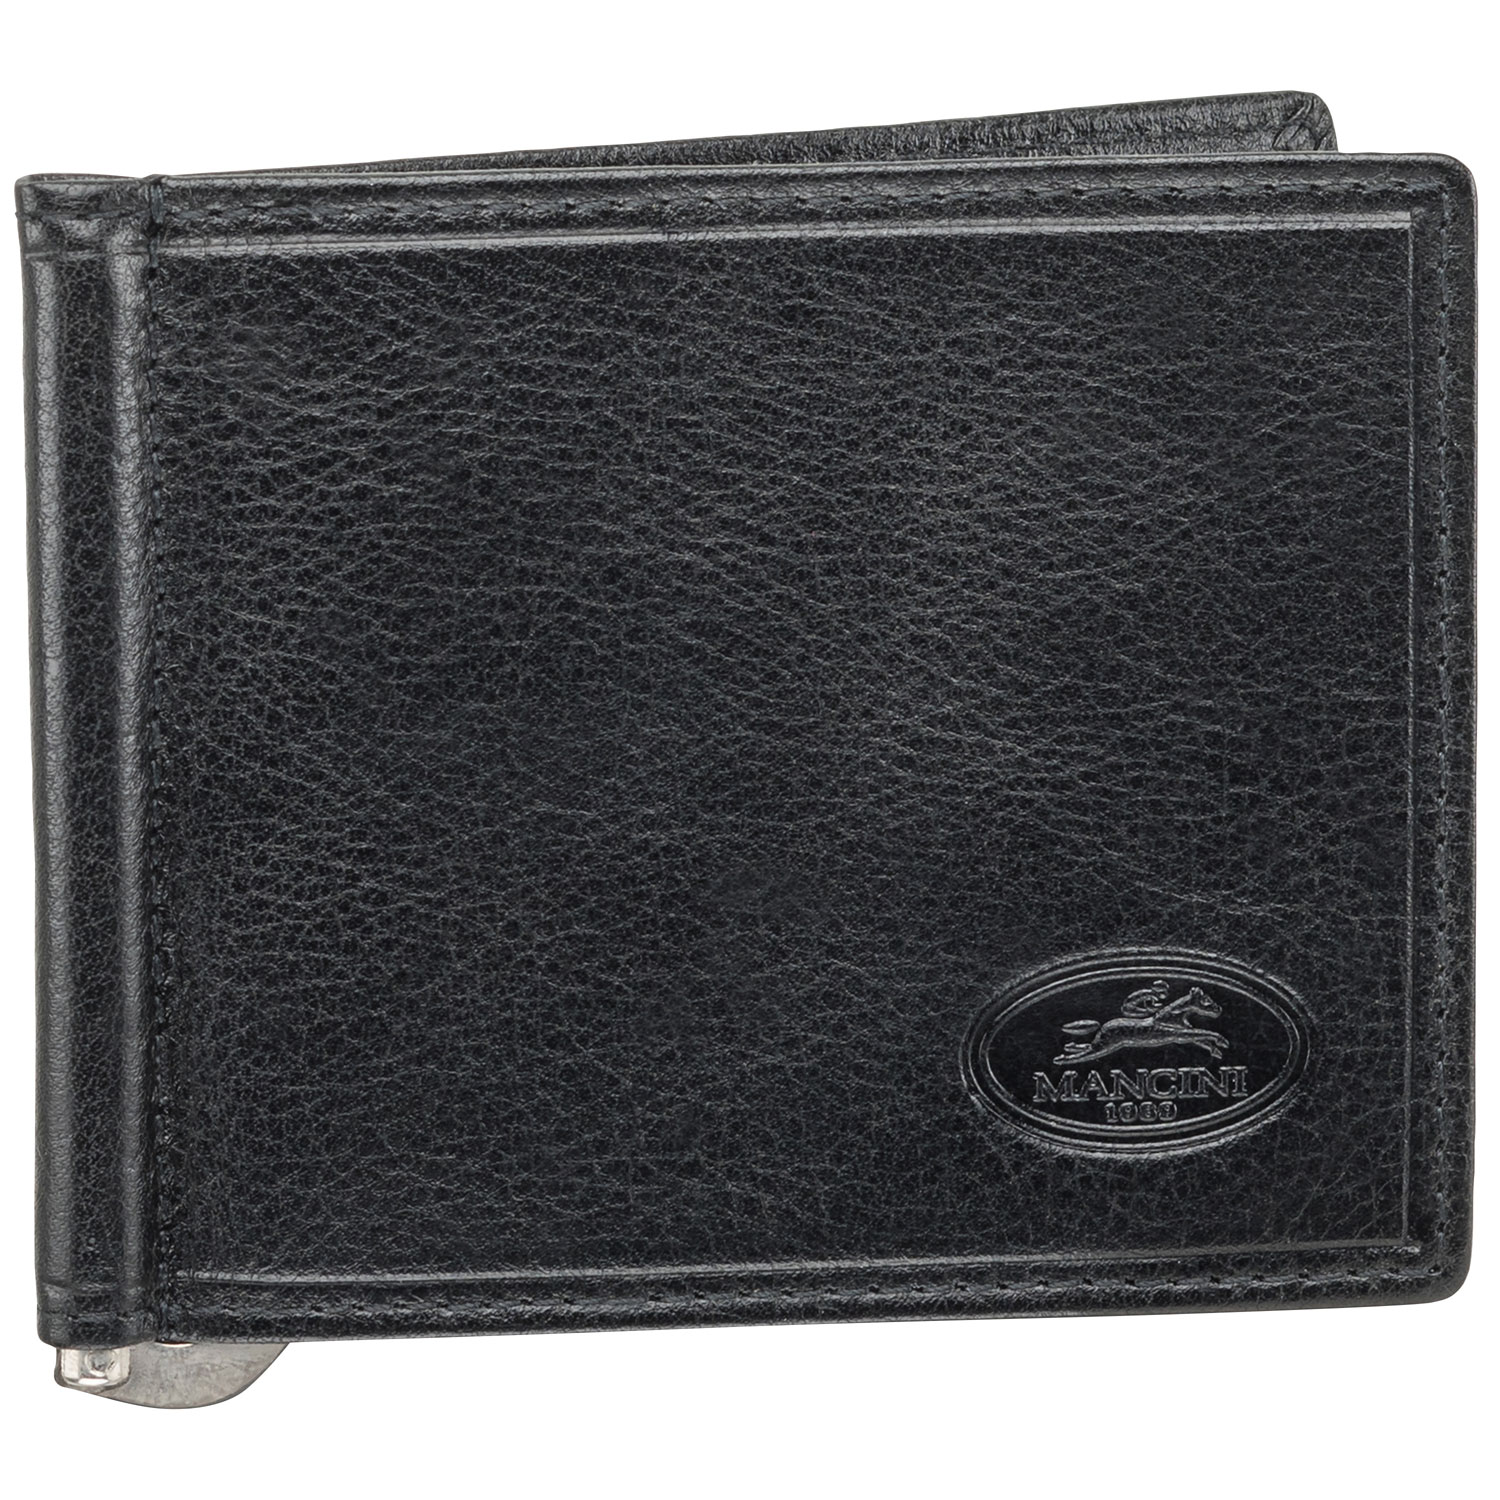 Mancini Equestrian2 Genuine Leather Money Clip Wallet - Black